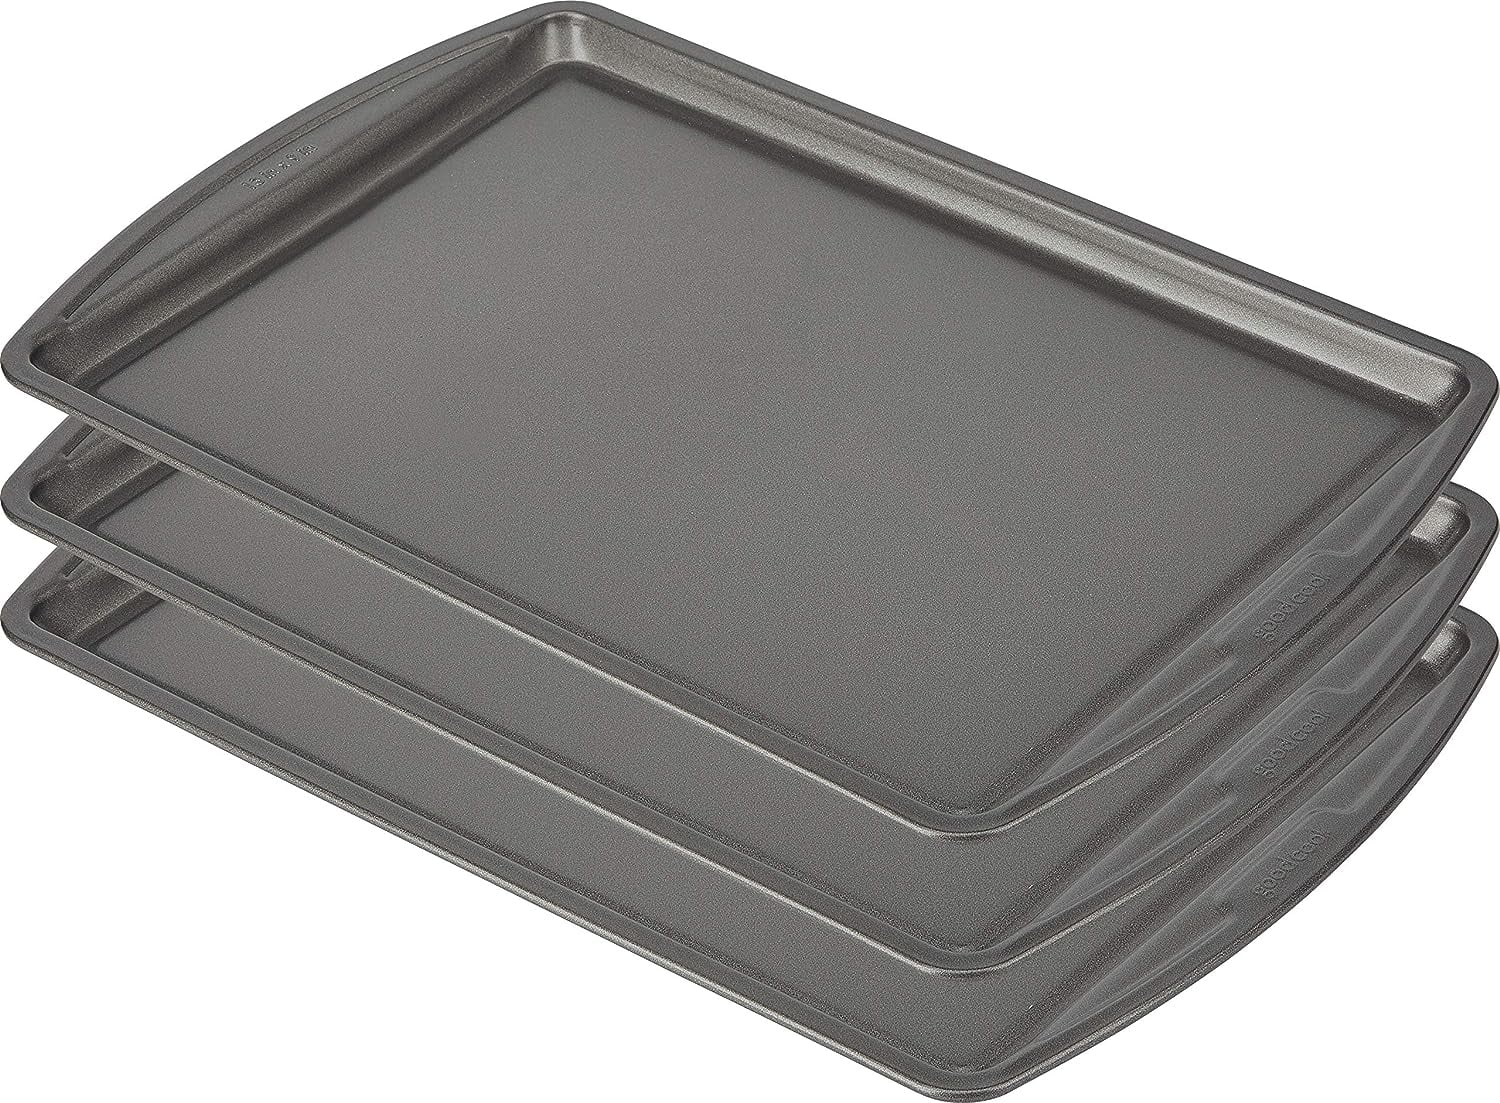 Mokpi Nonstick Square Cake Baking Pans Deep Cookie Sheets Set for Oven  Premium Baking Tray Bakeware, Set of 2 (13.2 x 7.8 x 1.9 inch, Black)